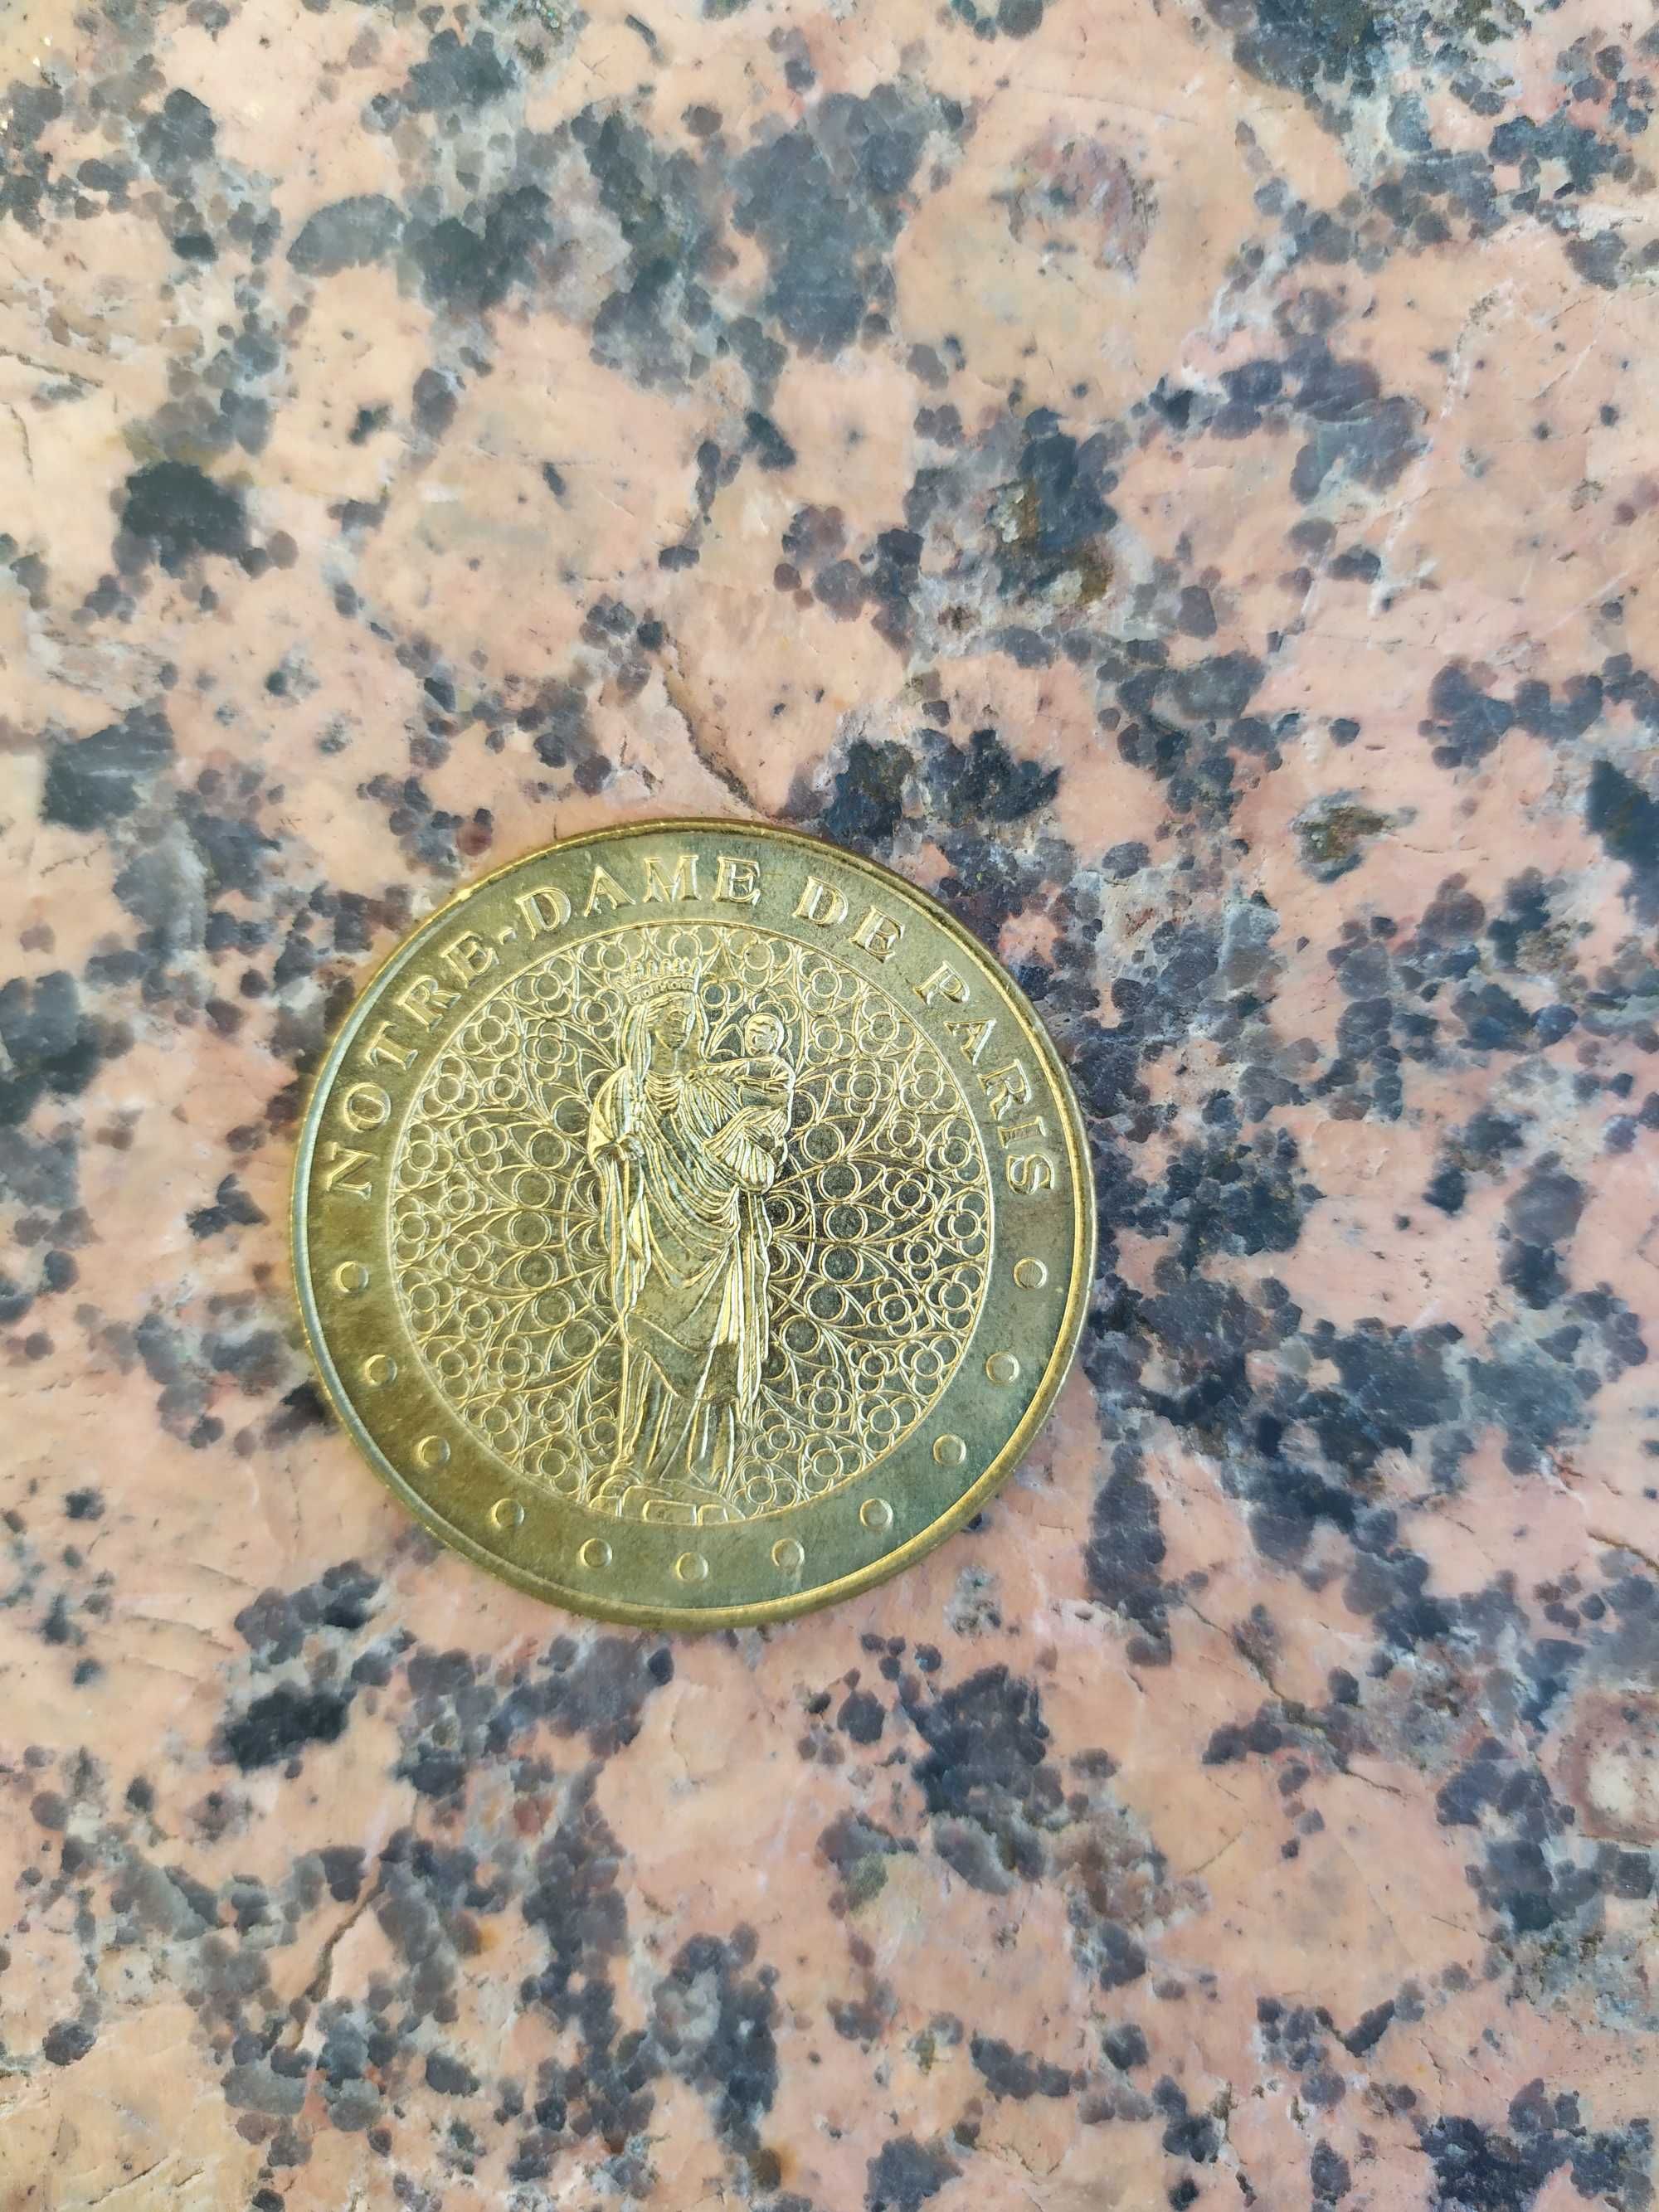 шкатулка старинная латунная., монеты юбилейные, кокарда